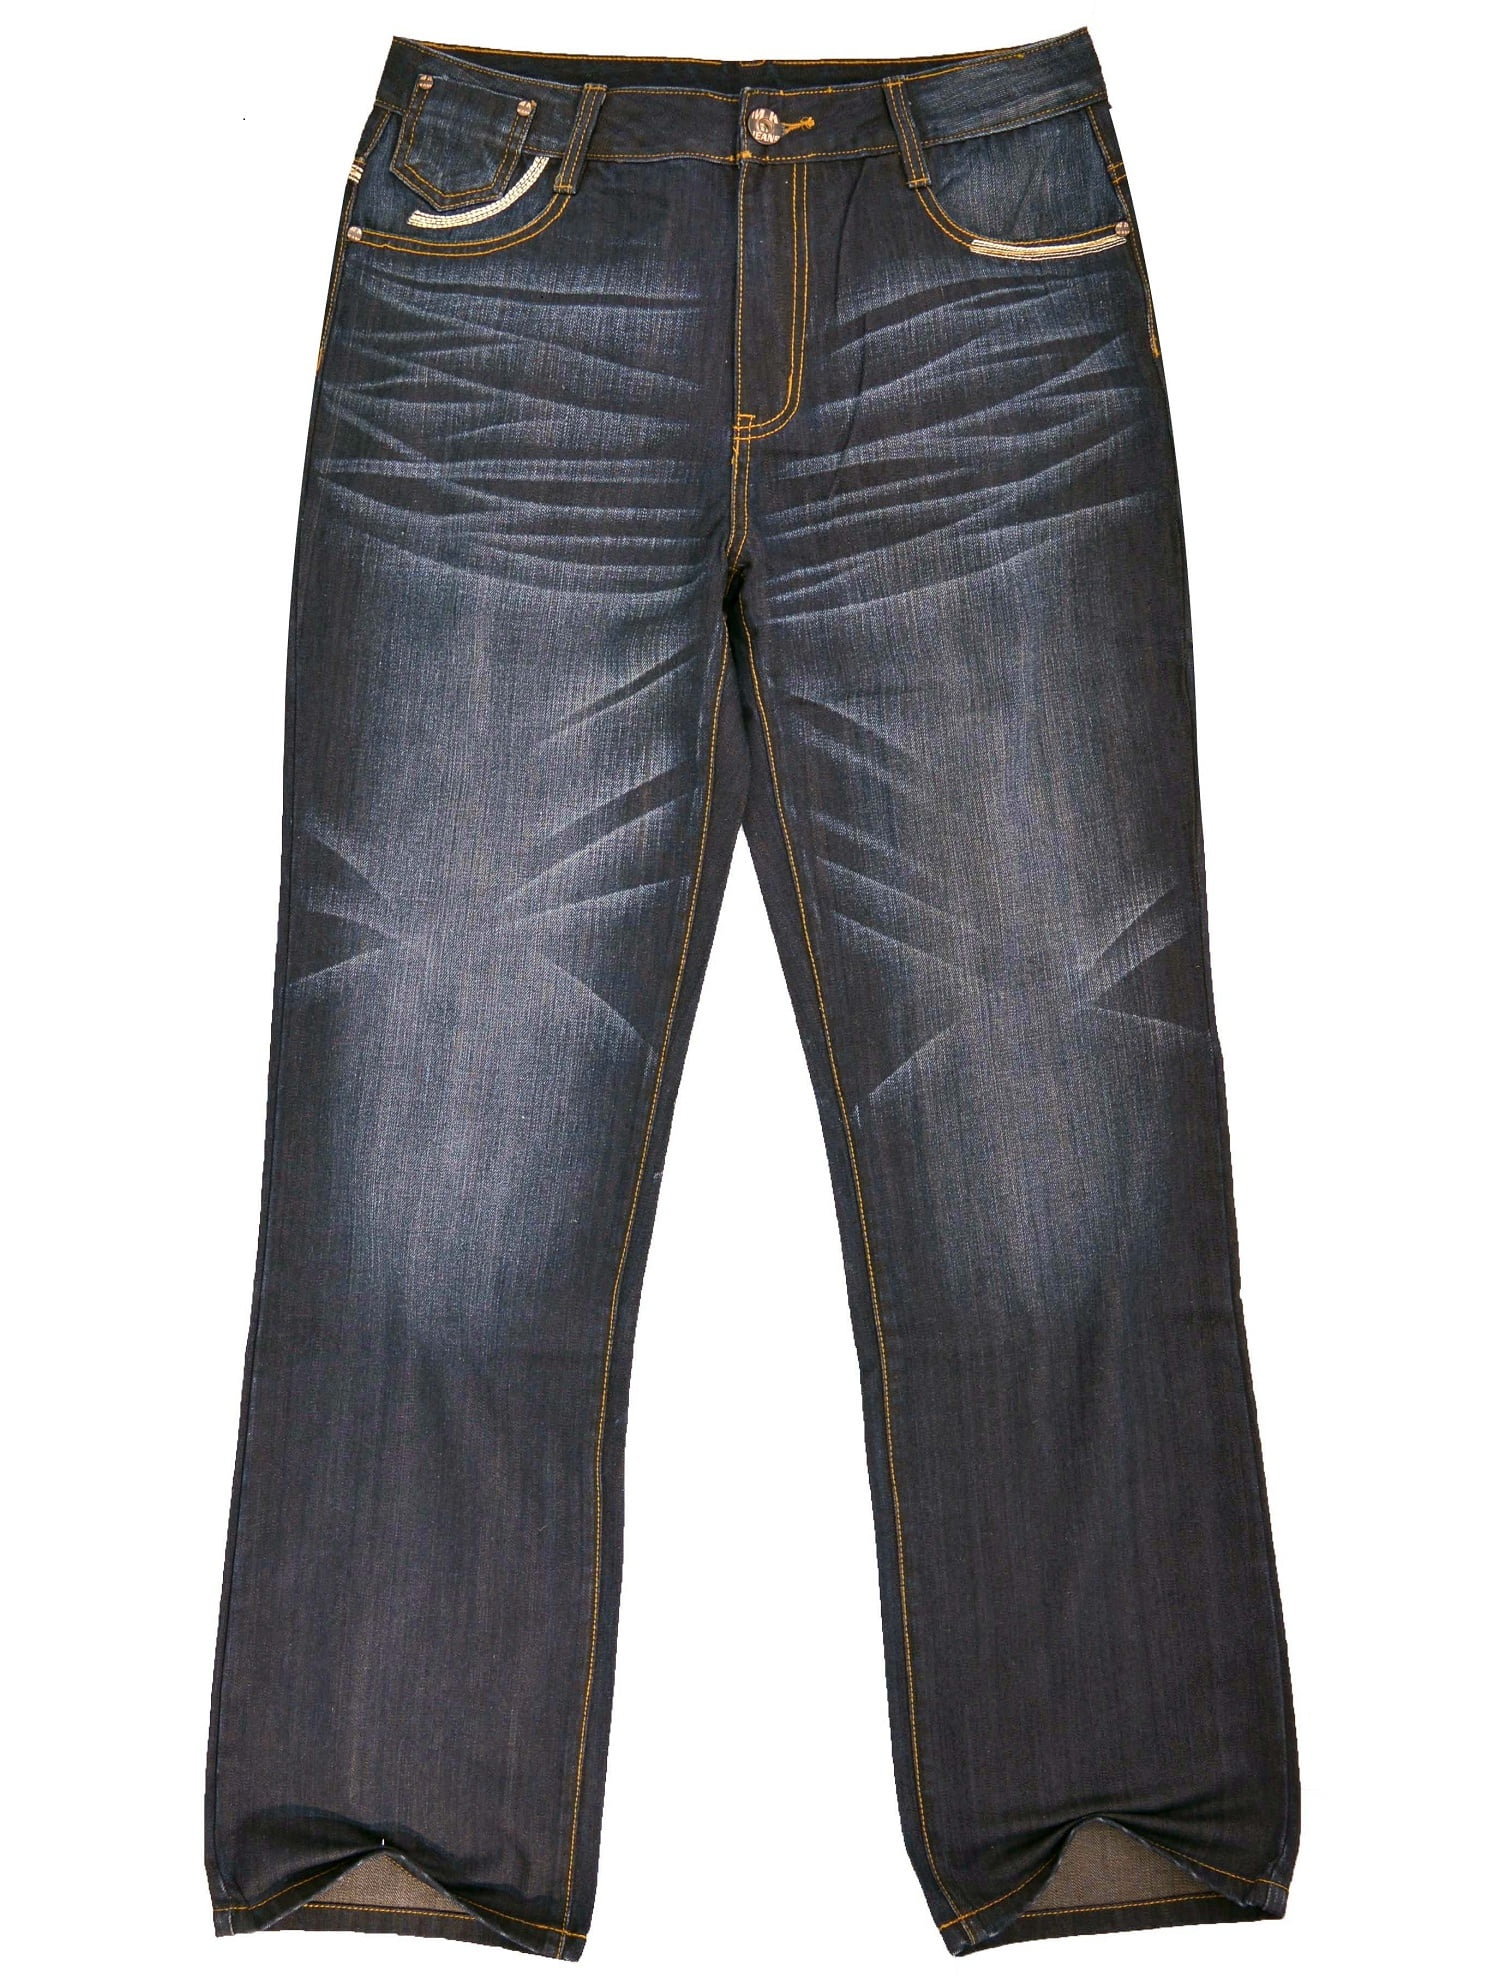 Men's Regular Fit Jeans 2096 BU (Jeans 32x34) - Walmart.com